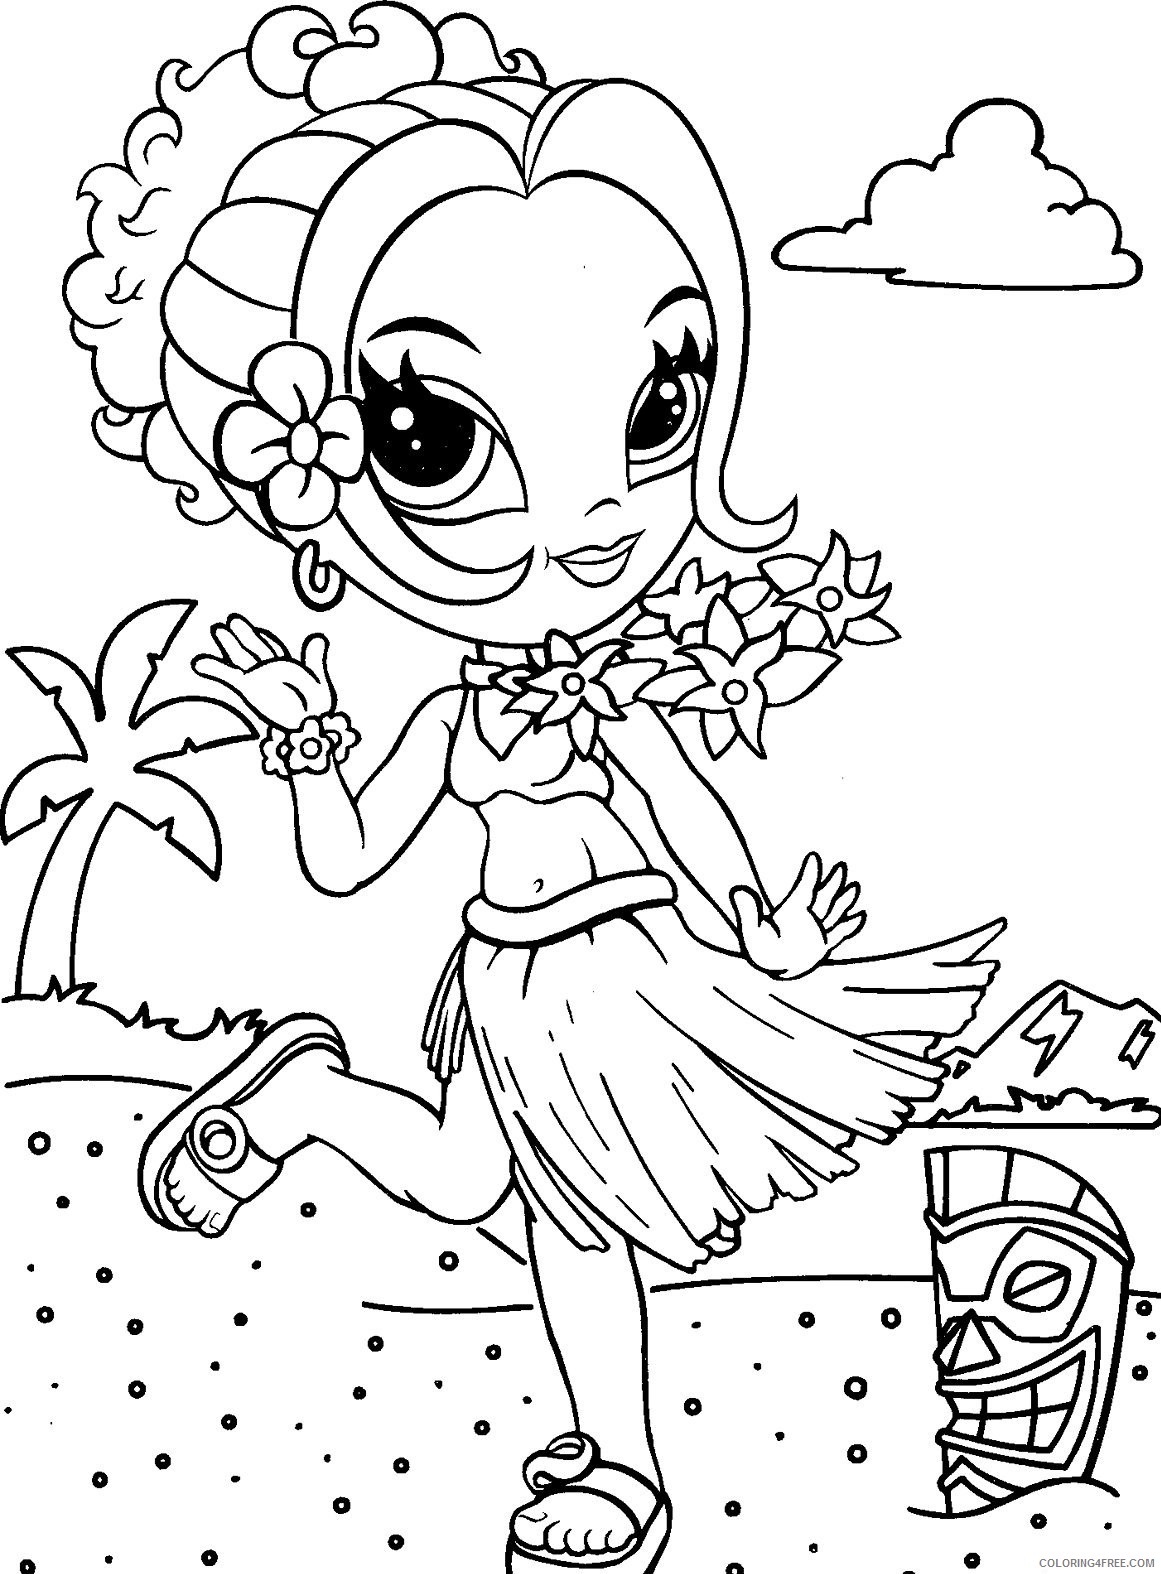 lisa frank coloring pages girl at hawaii beach Coloring4free